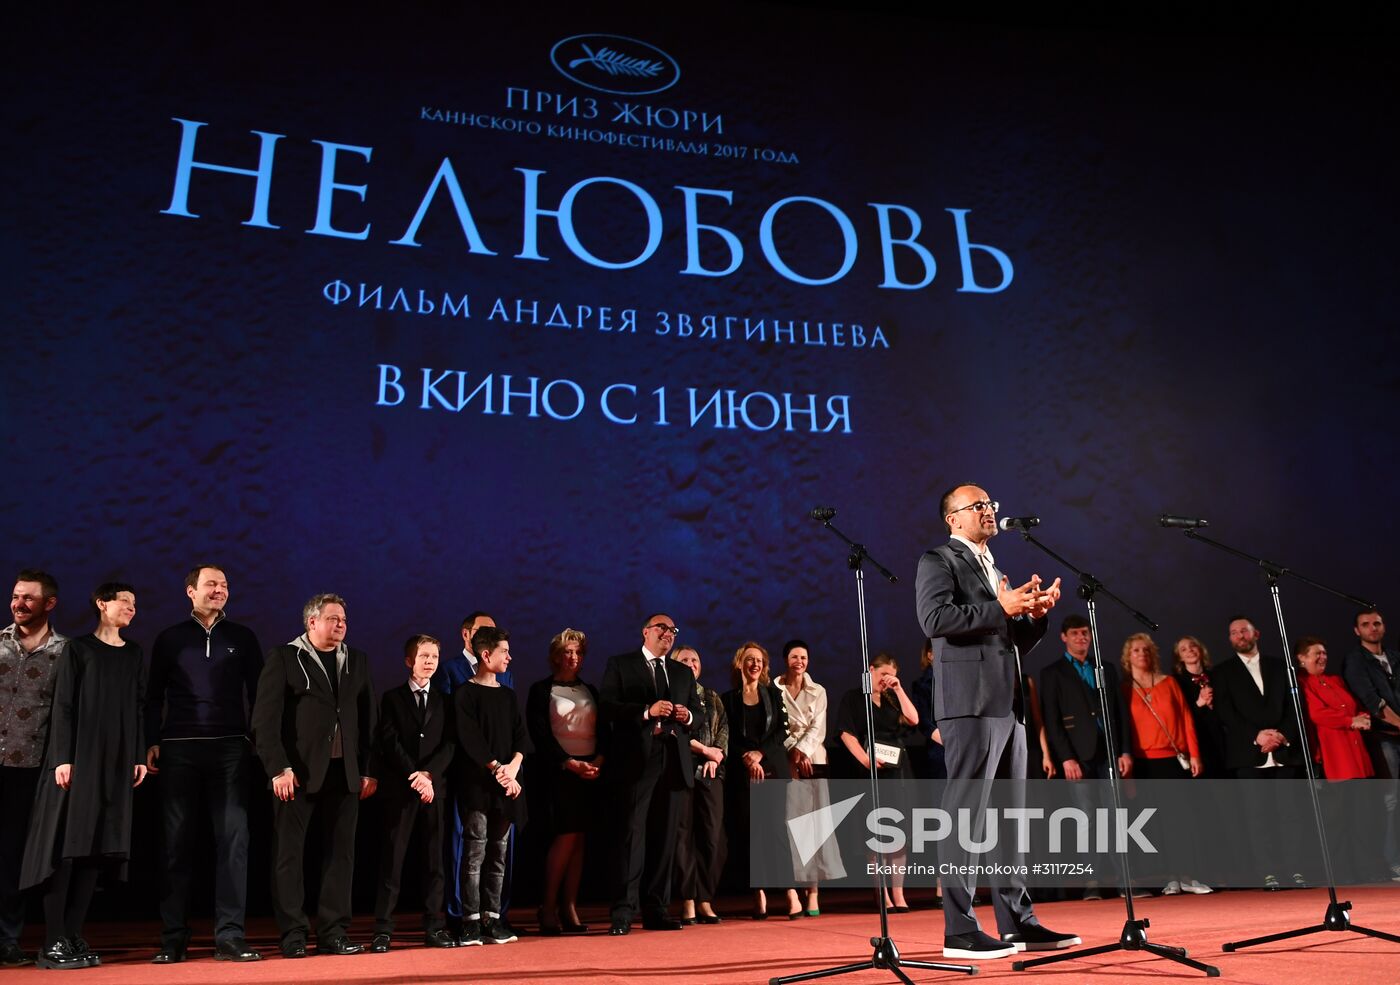 Premiere of film "Loveless" directed by Andrei Zvyagintsev